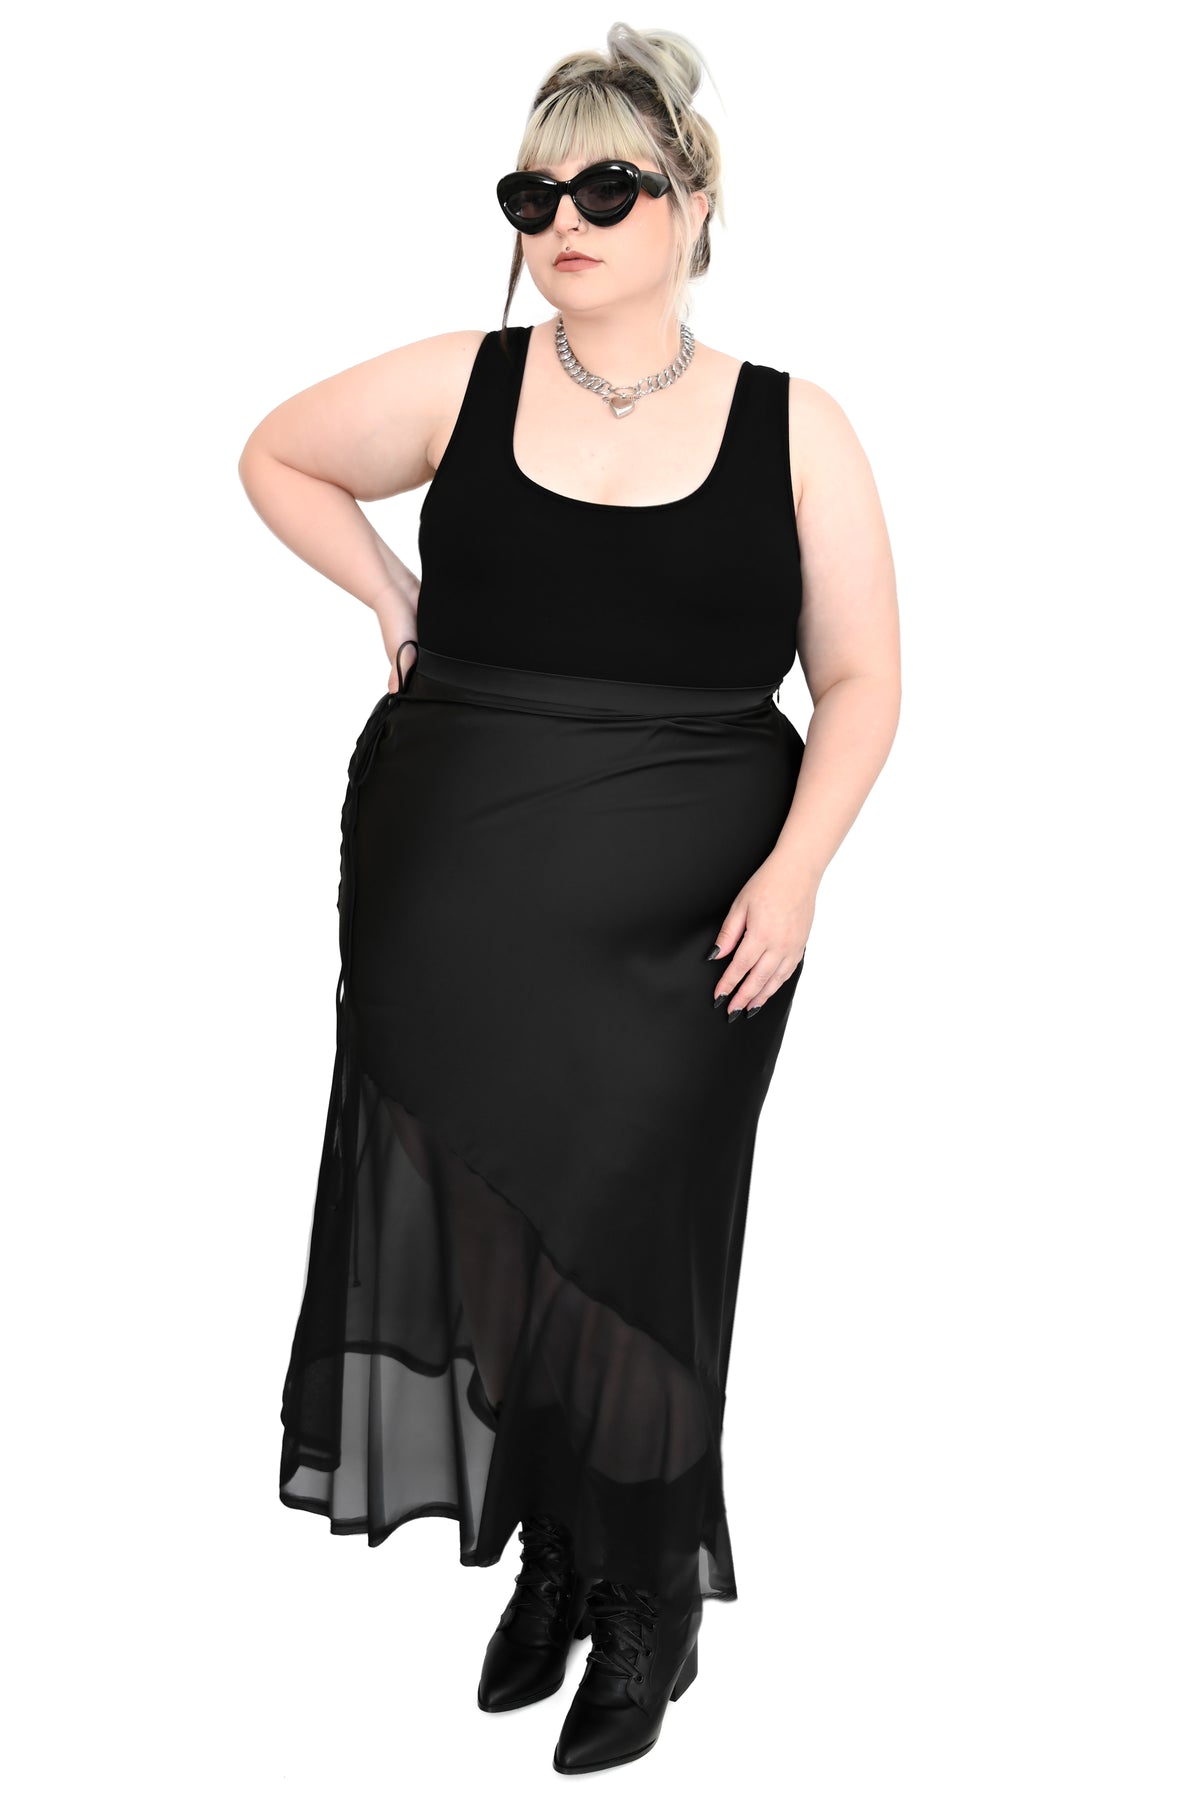 black satin maxi skirt with waist tie and mesh bottom panel